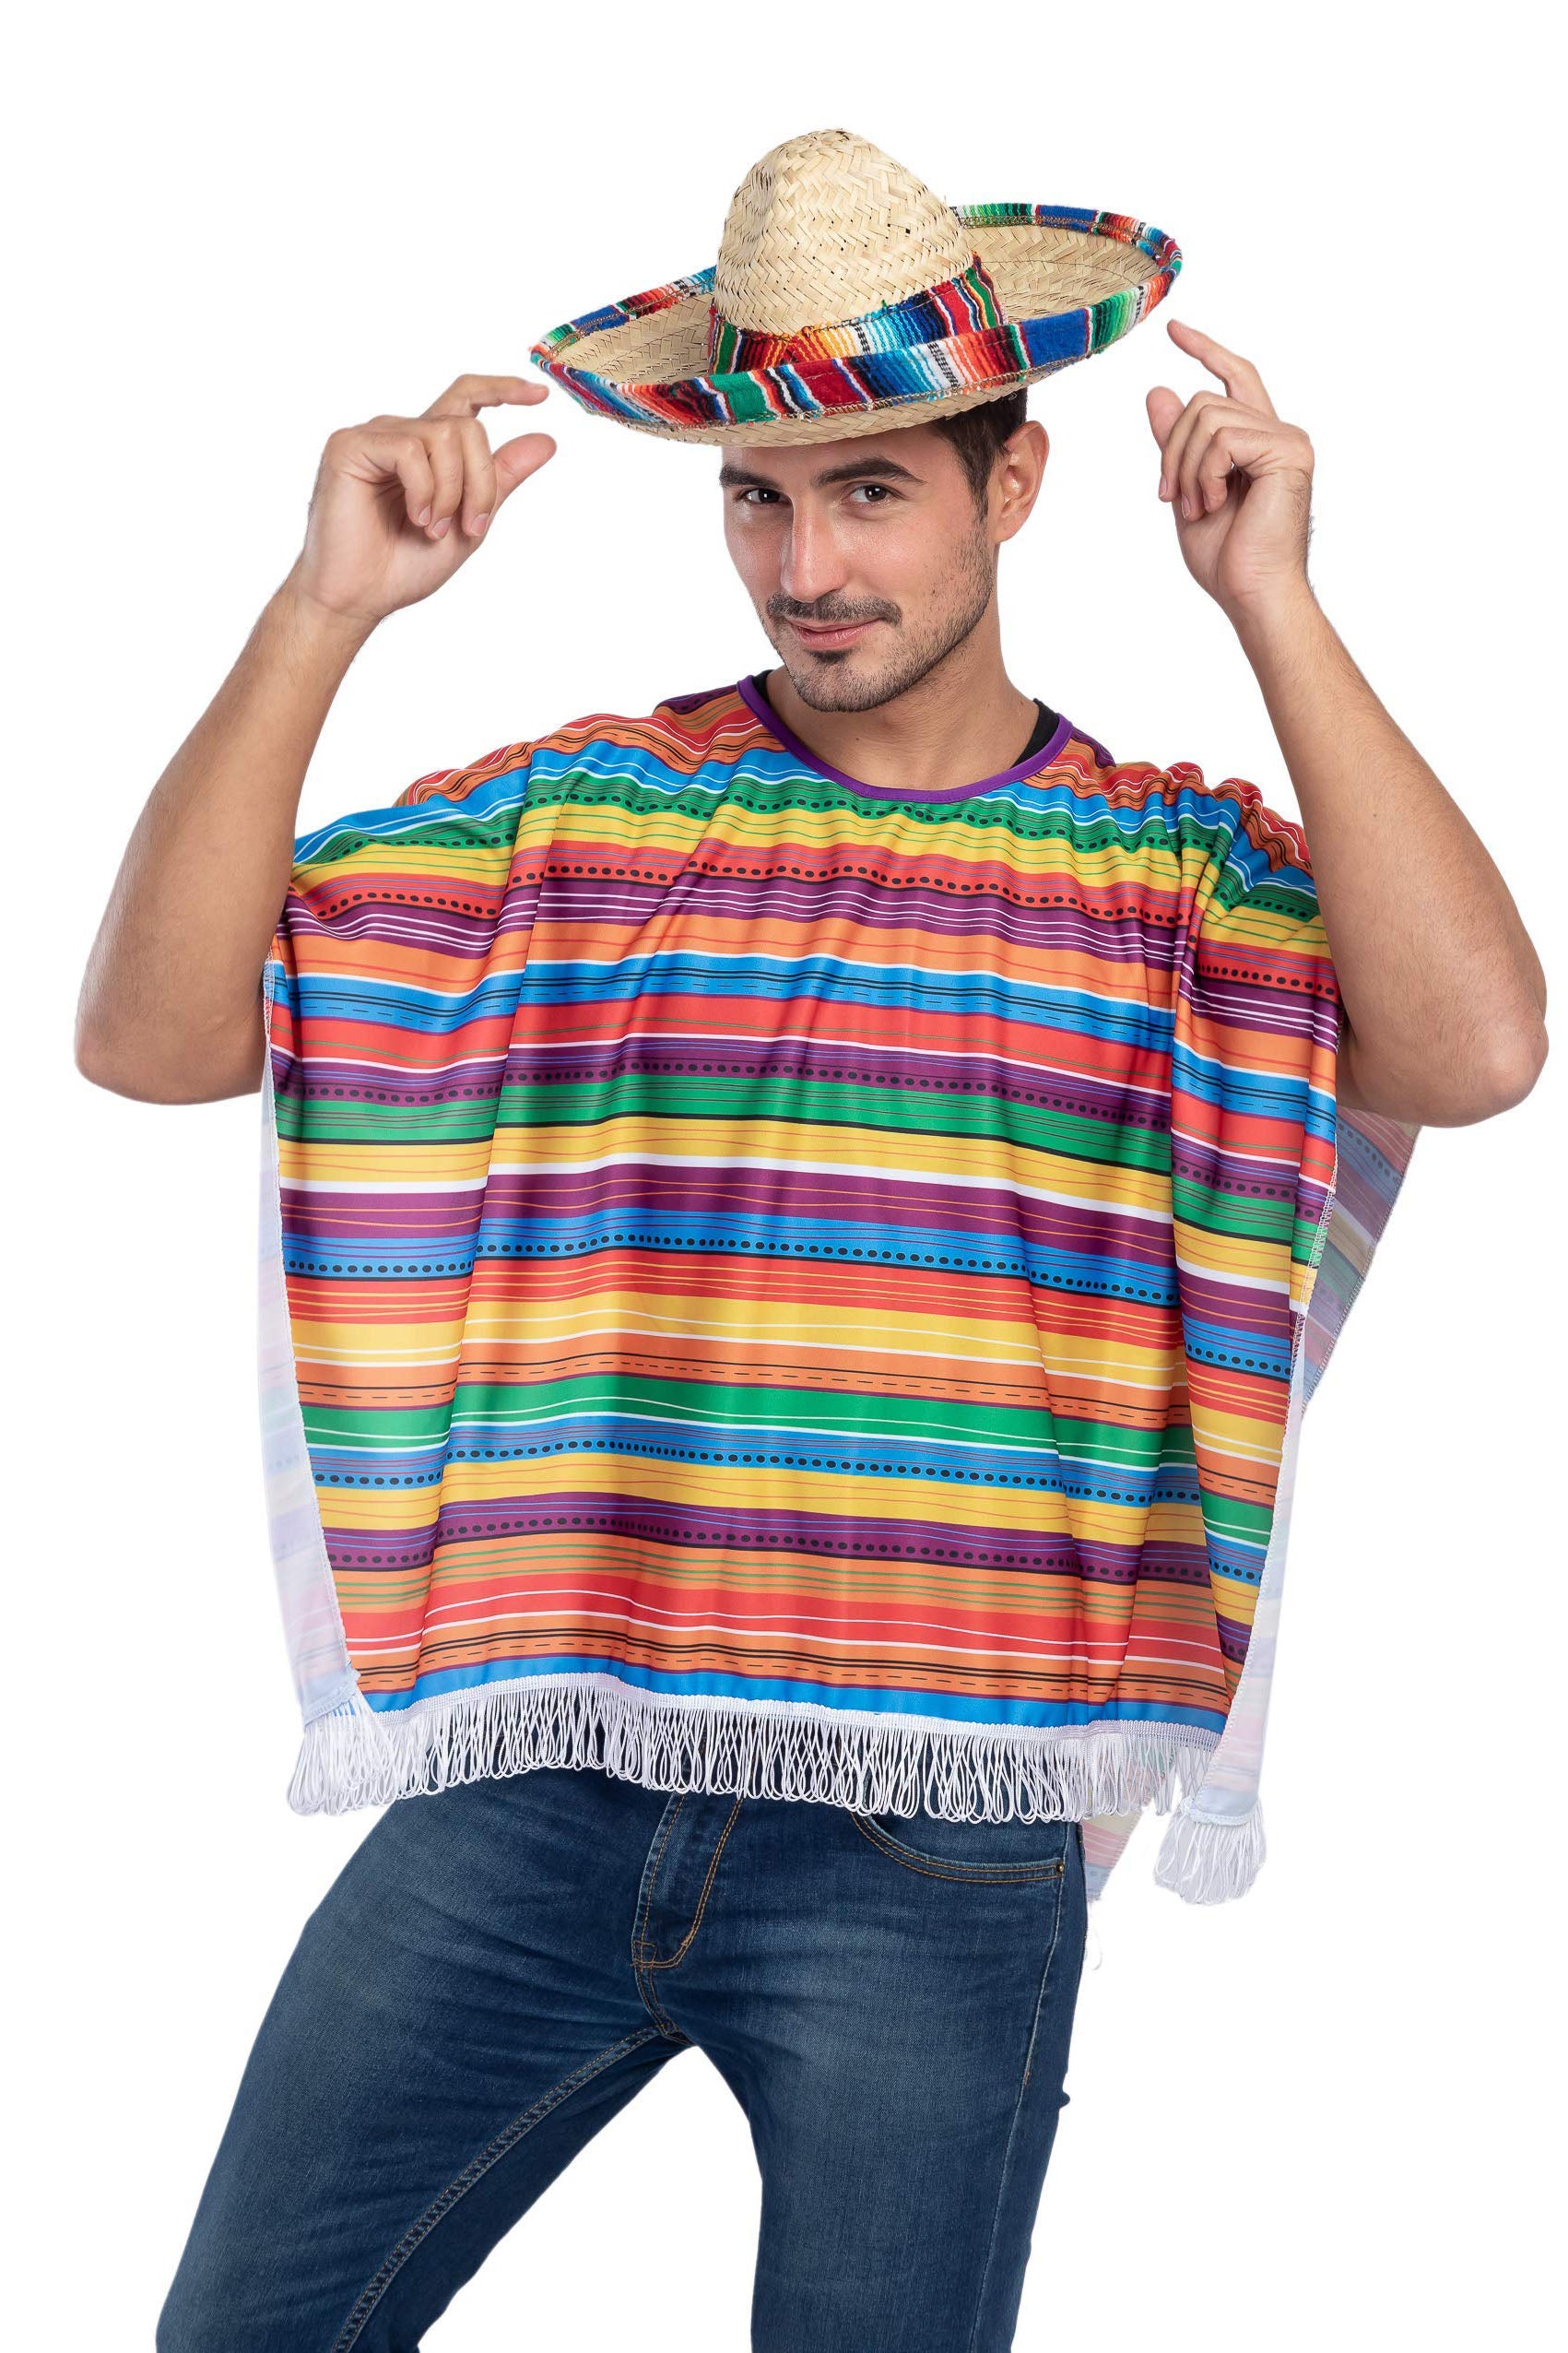 Cinco de Mayo Poncho Costume For Adult.